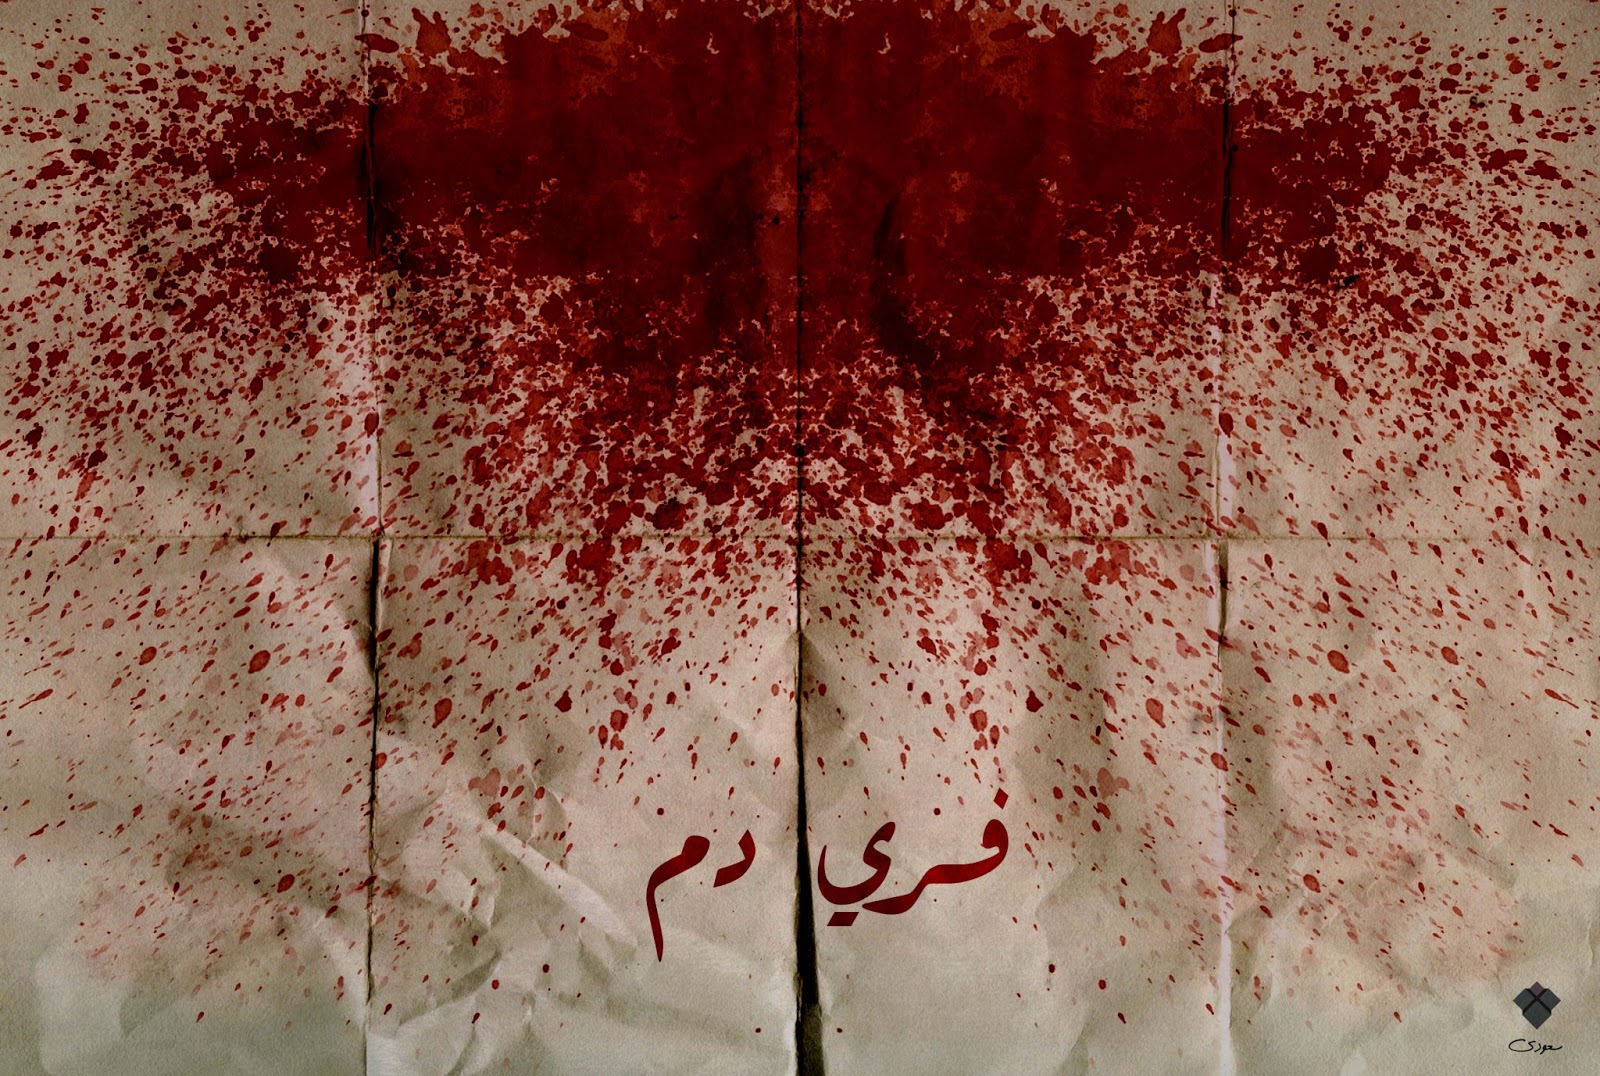 Doctor Ojiplatico. Mhd Saudi Artwork. Posters about Syrian Revolution